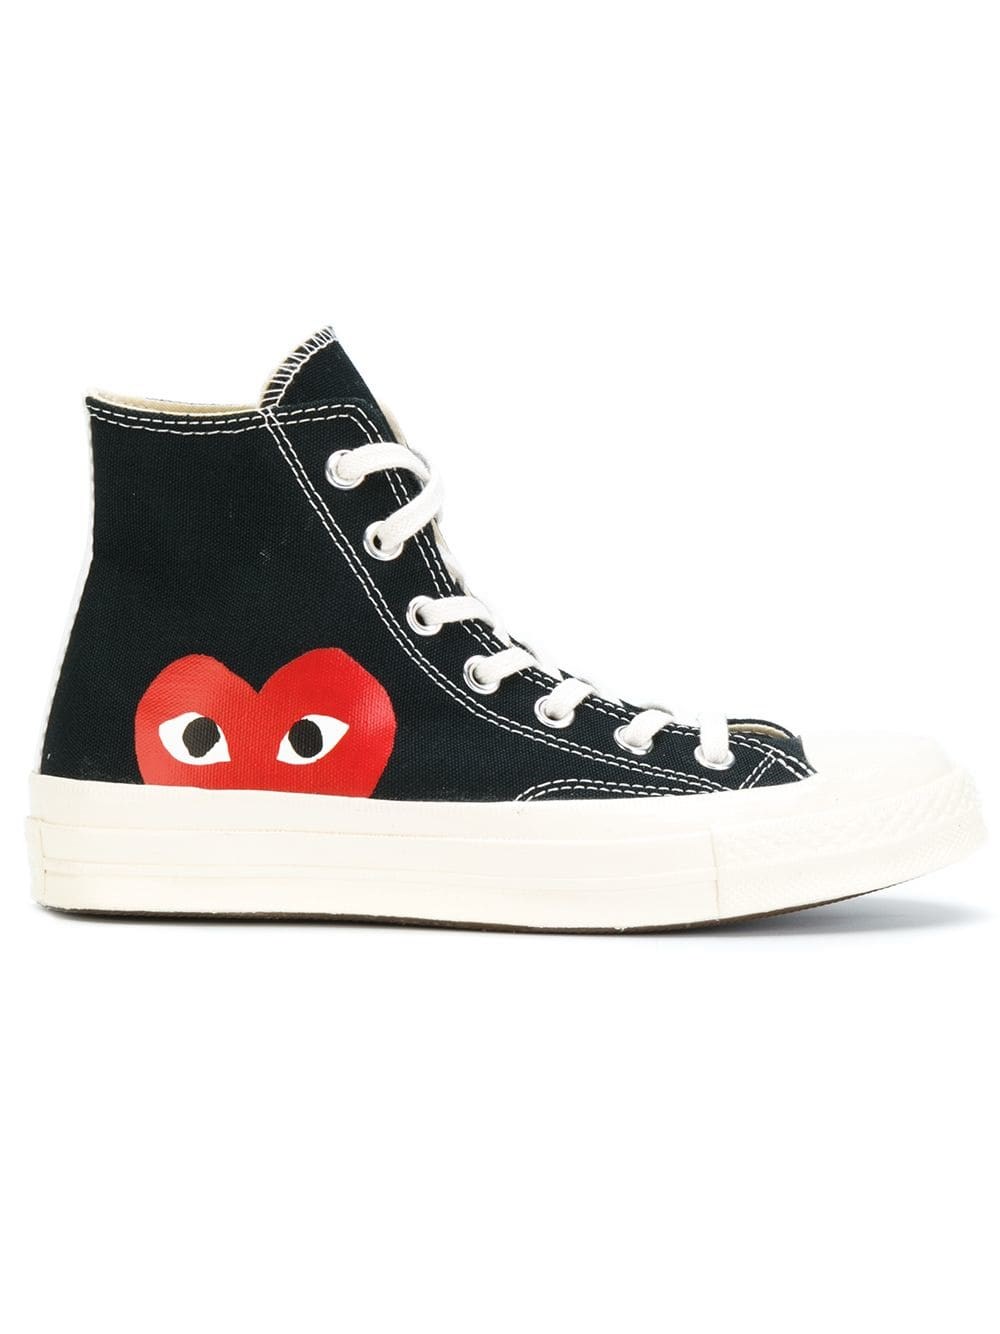 converse sneakers heart